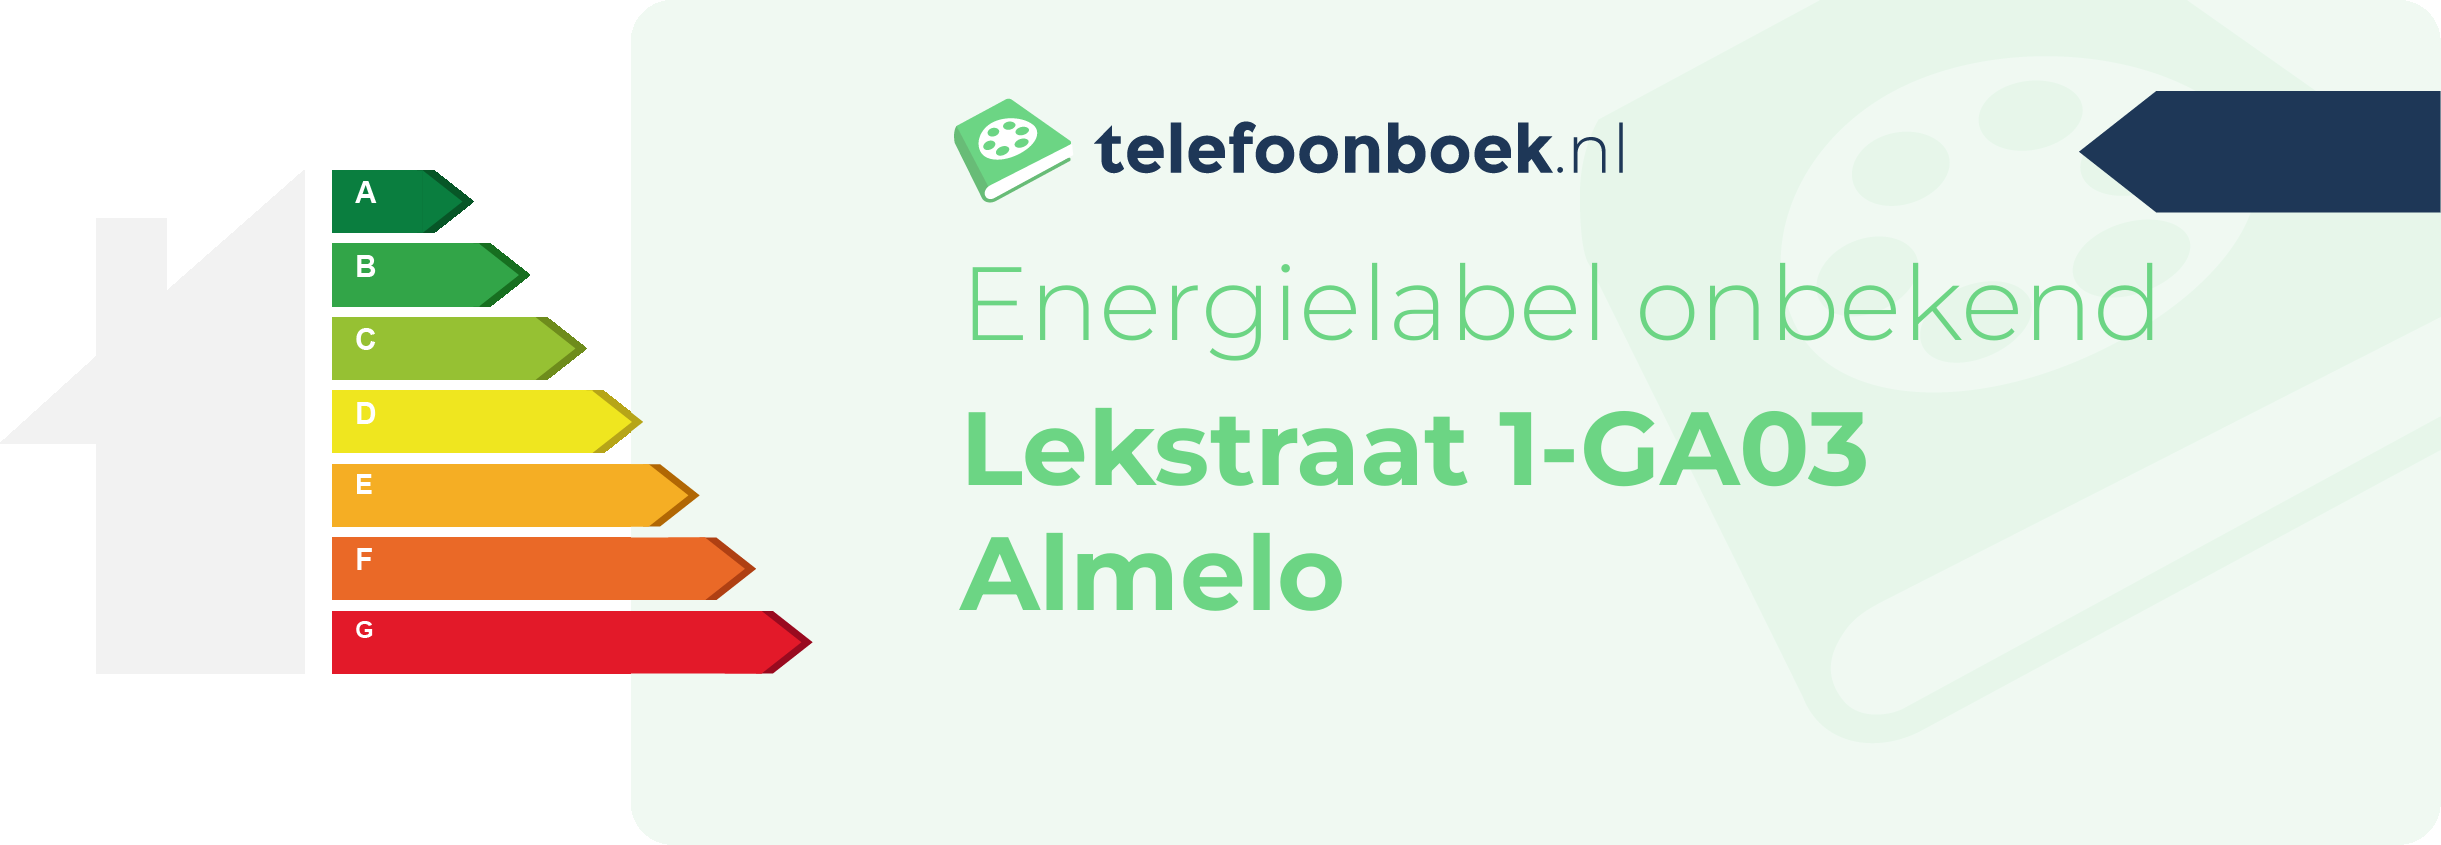 Energielabel Lekstraat 1-GA03 Almelo